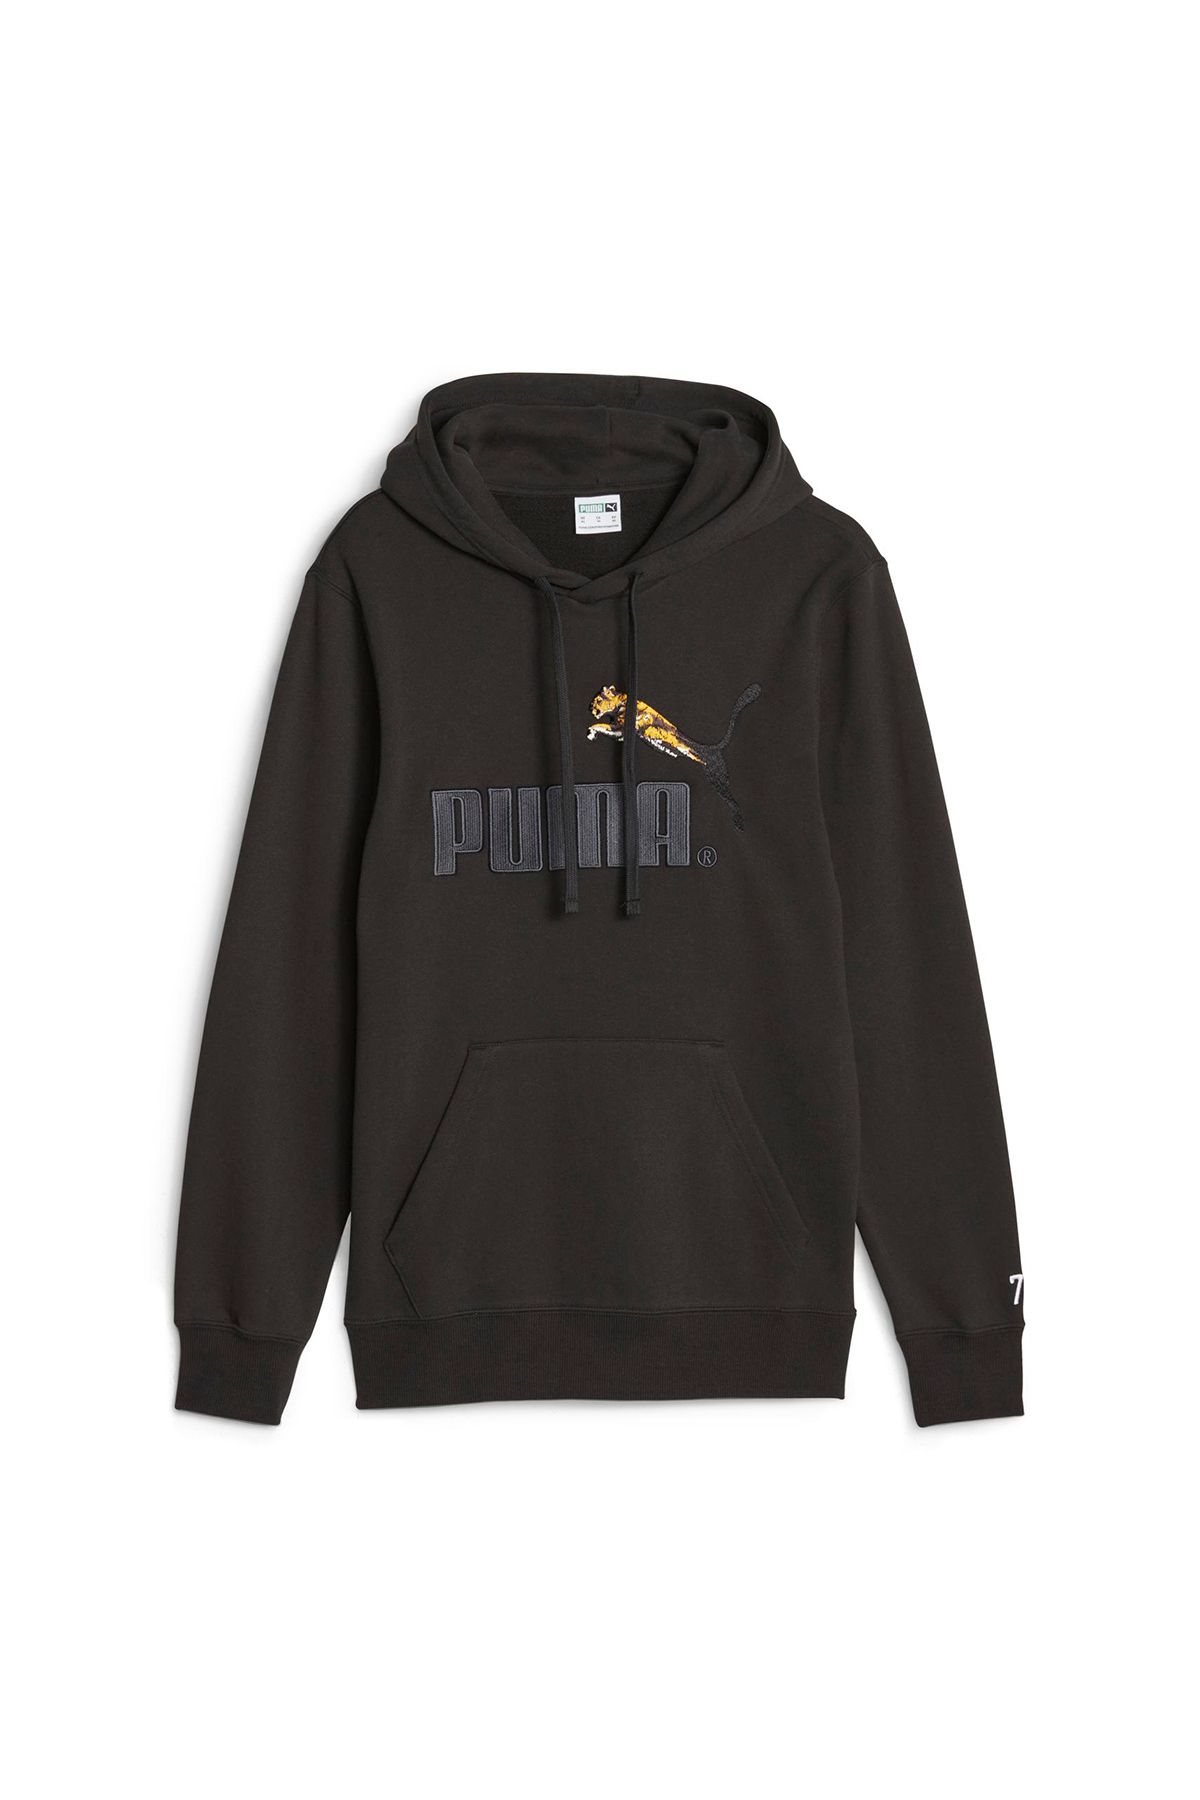 Puma Classics No.1 Logo Unisex Çok Renkli Günlük Stil Sweatshirt 62267101